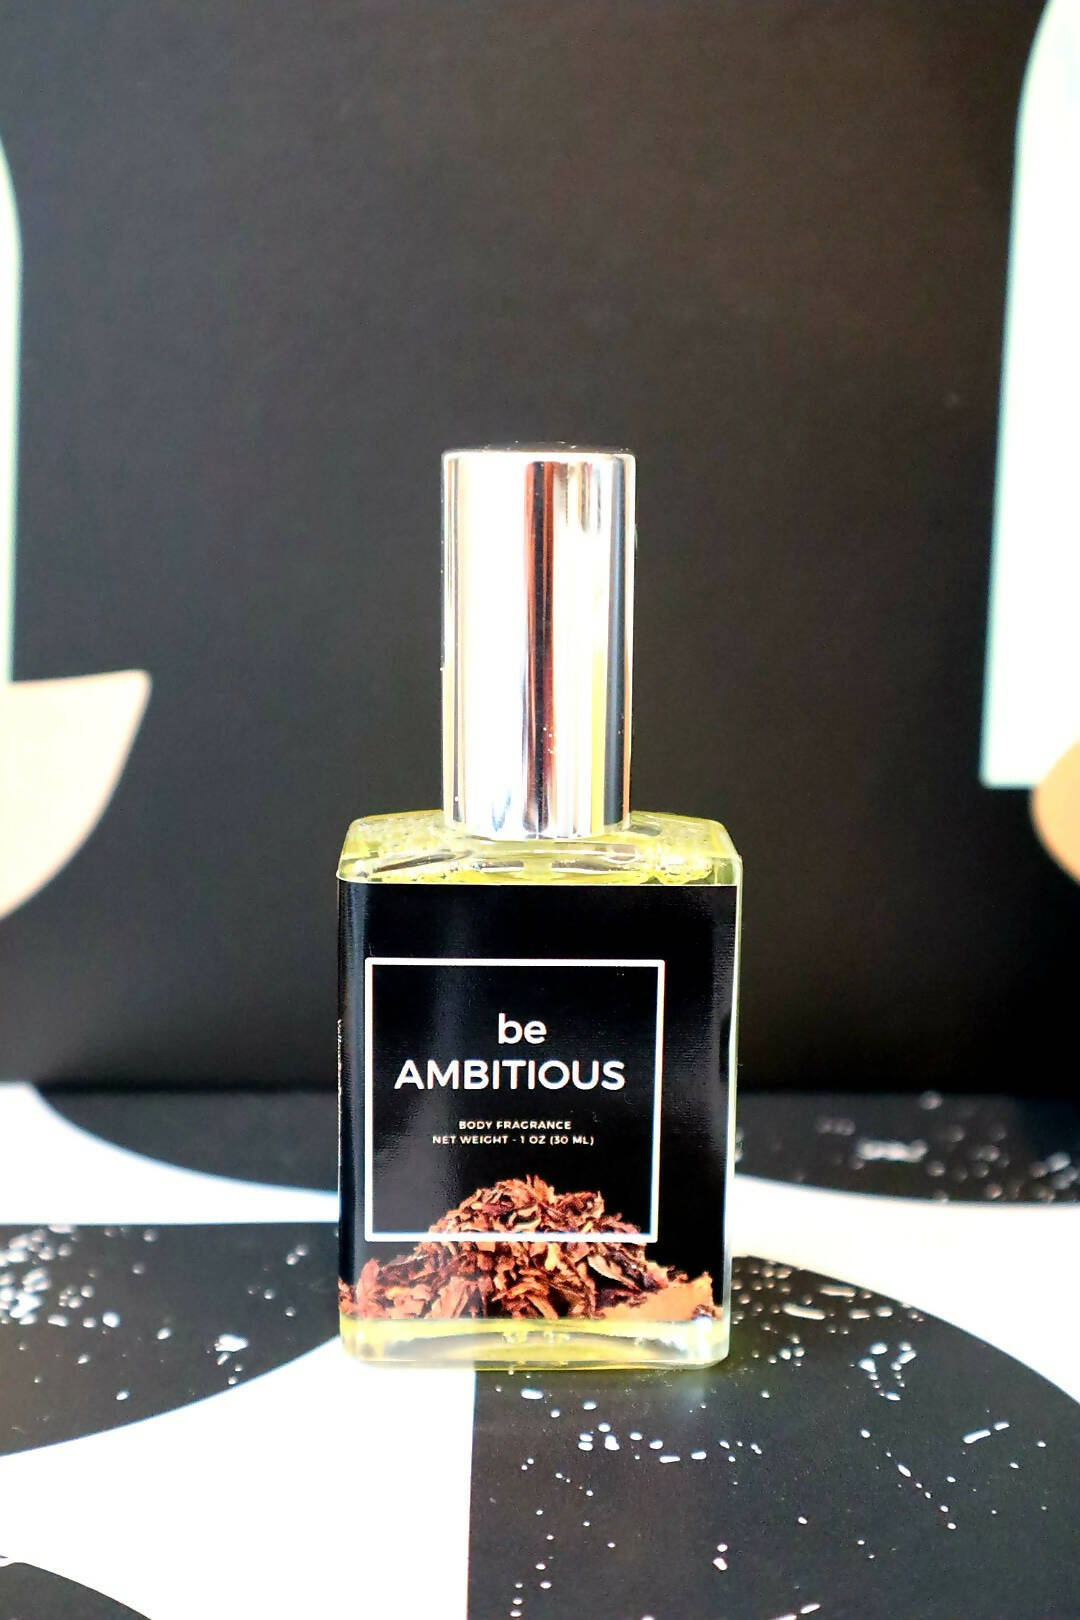 beAMBITIOUS Men's Body Fragrance